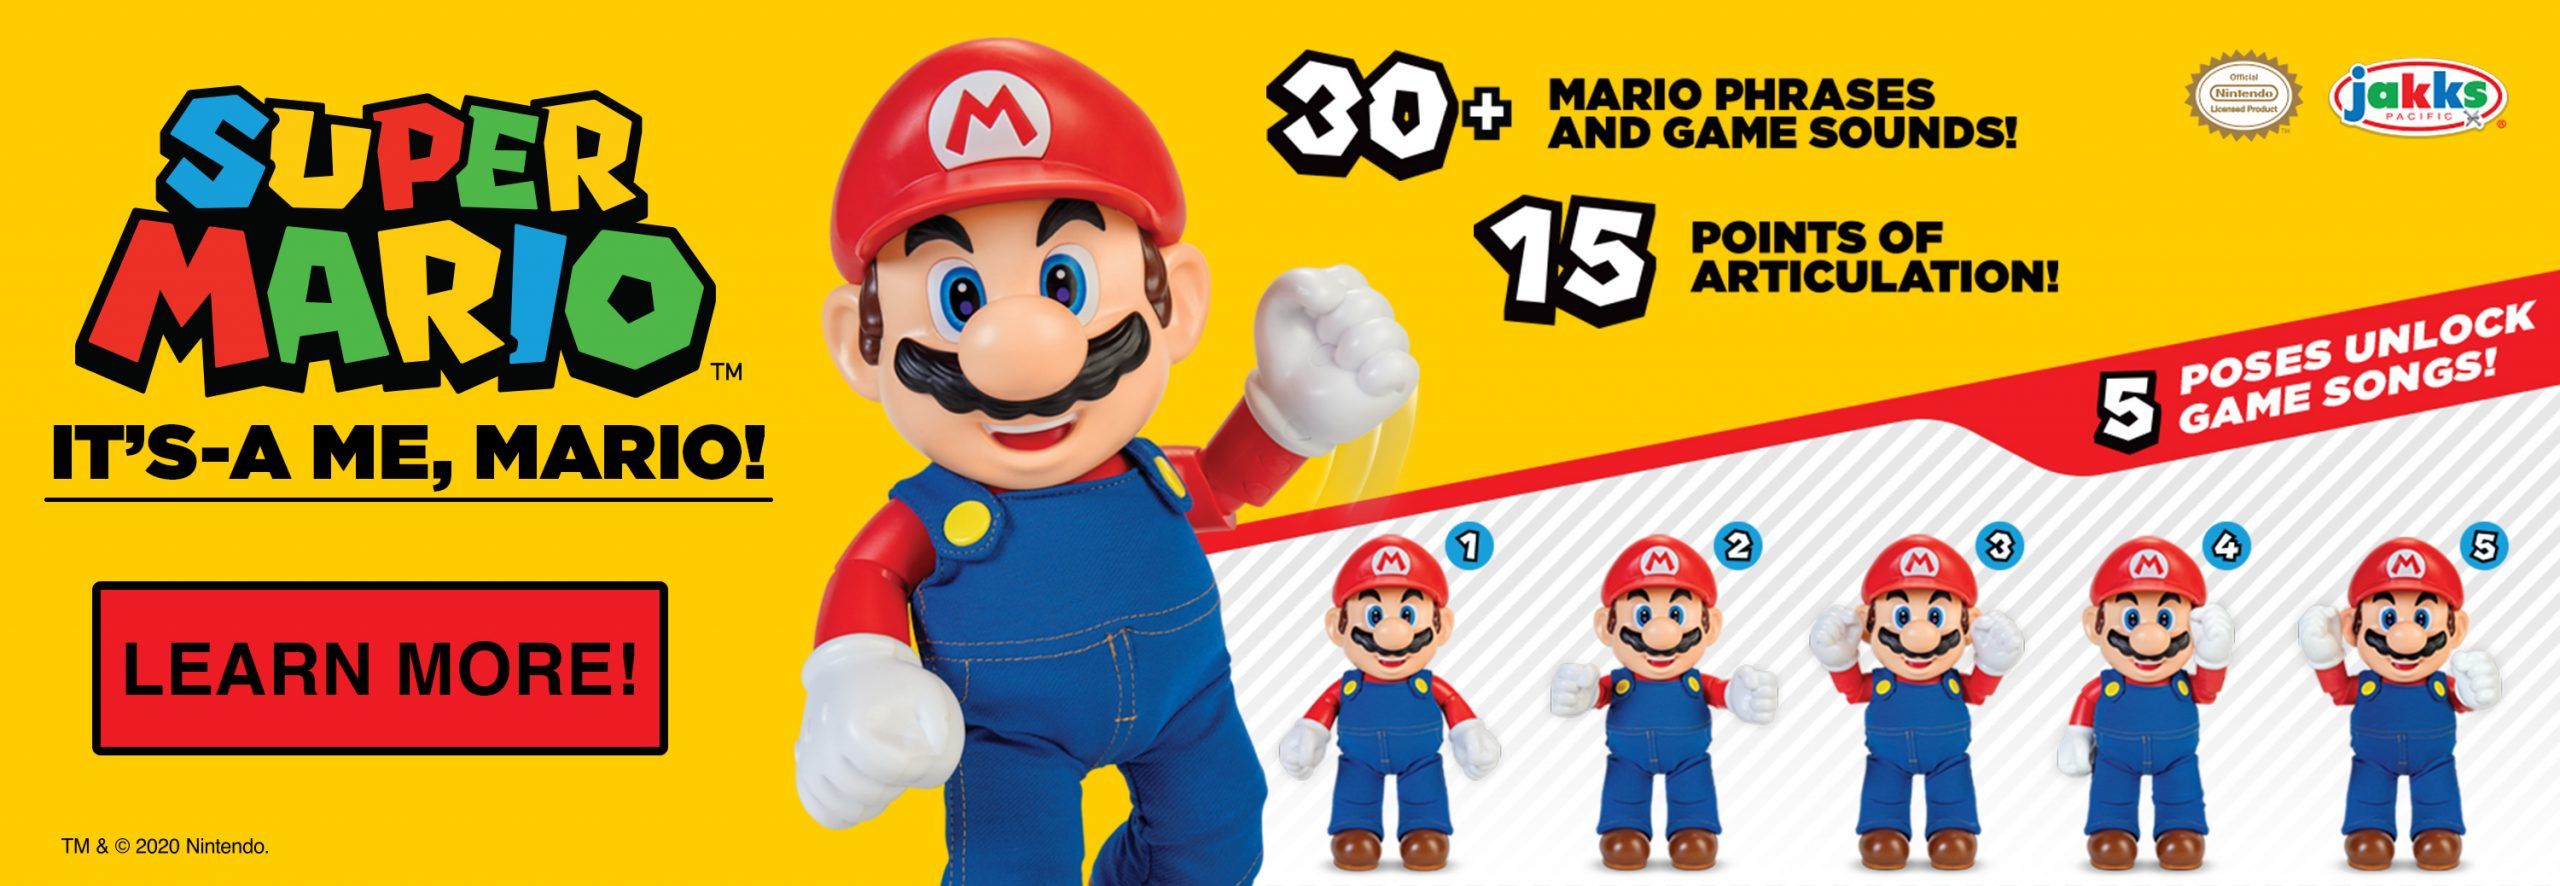 3D Mario, Mario, Nintendo, Nintendo Switch, Super Mario 3d land, Super Mario 3D World, Super Mario 64, Super Mario Galaxy, Super Mario Odyssey, super mario sunshine, super-mario-galaxy-2, Switch